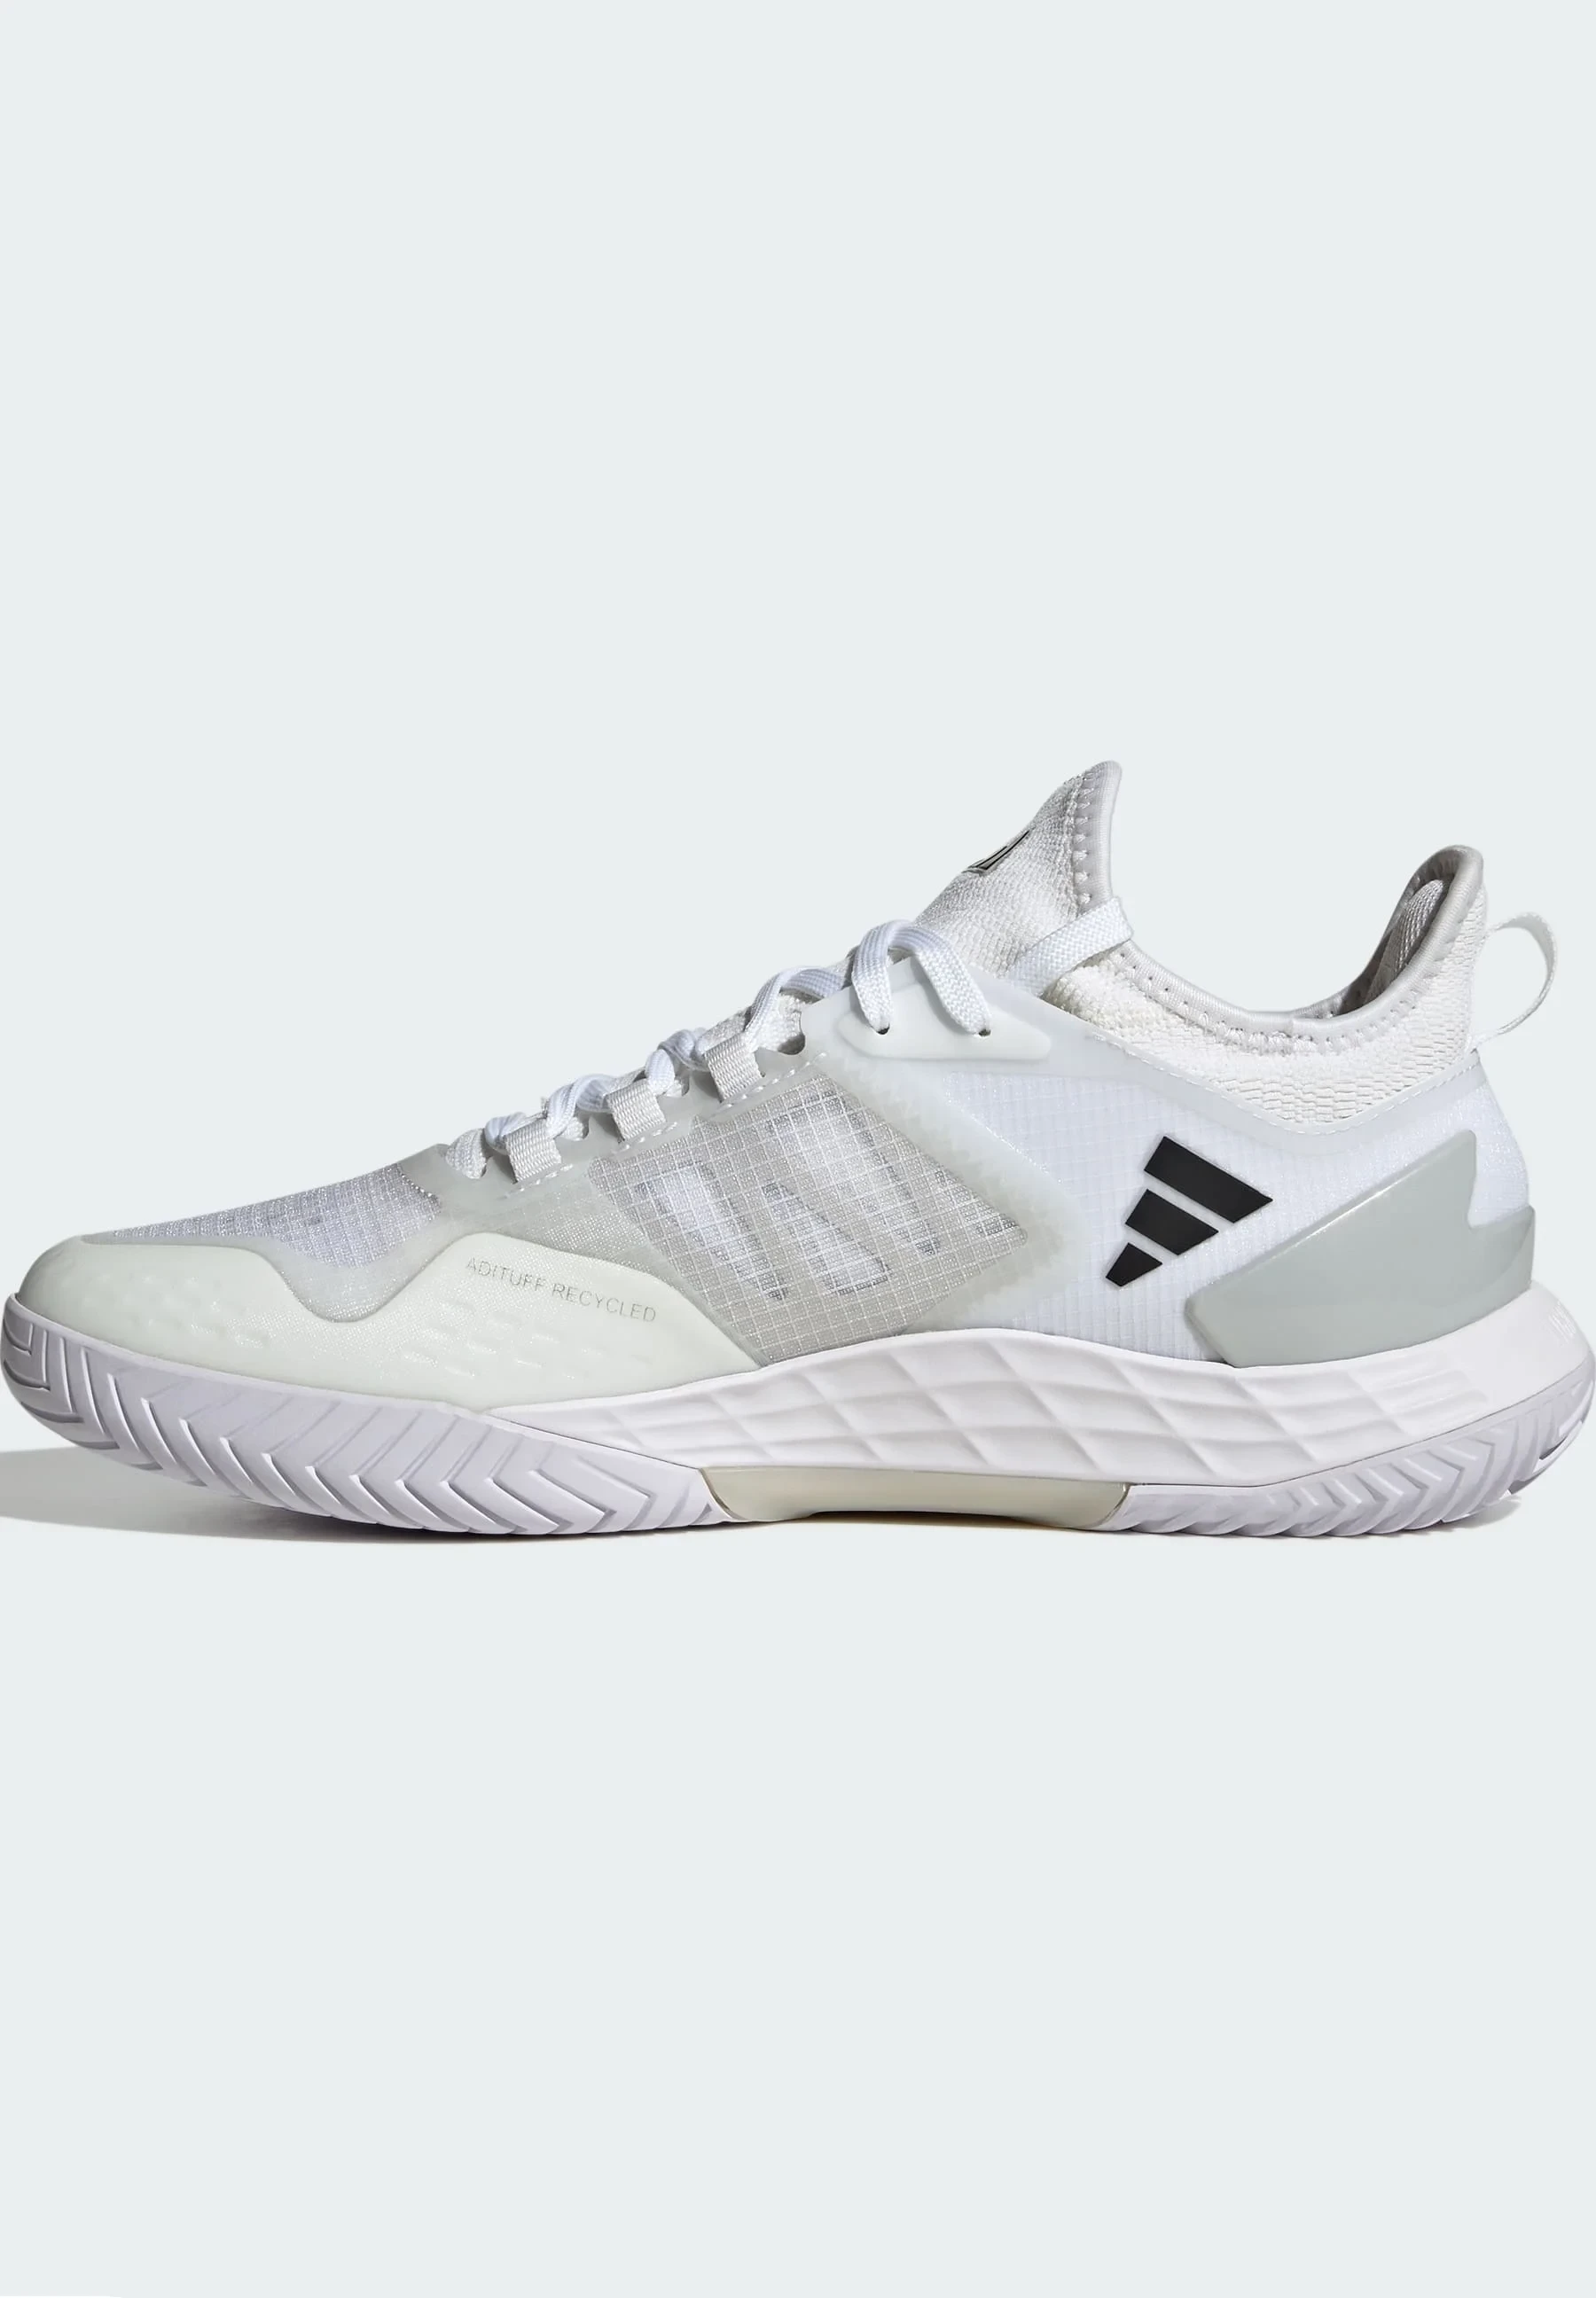 Adidas Adizero Ubersonic 4.1 CL M blanco